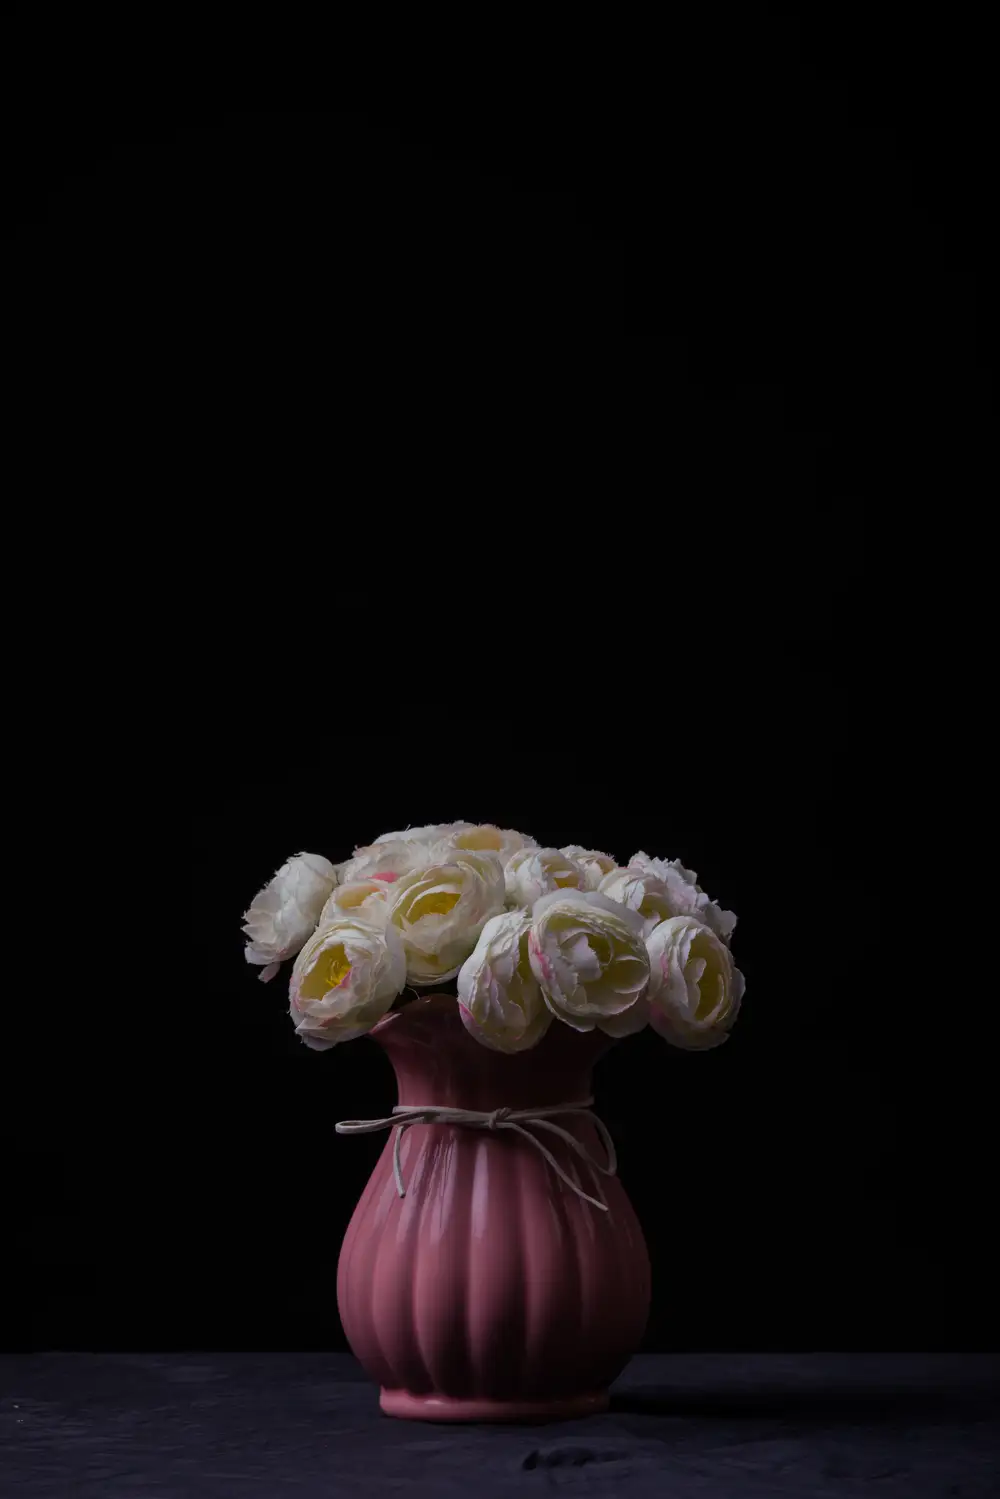 Blooming flowers in a pink vase